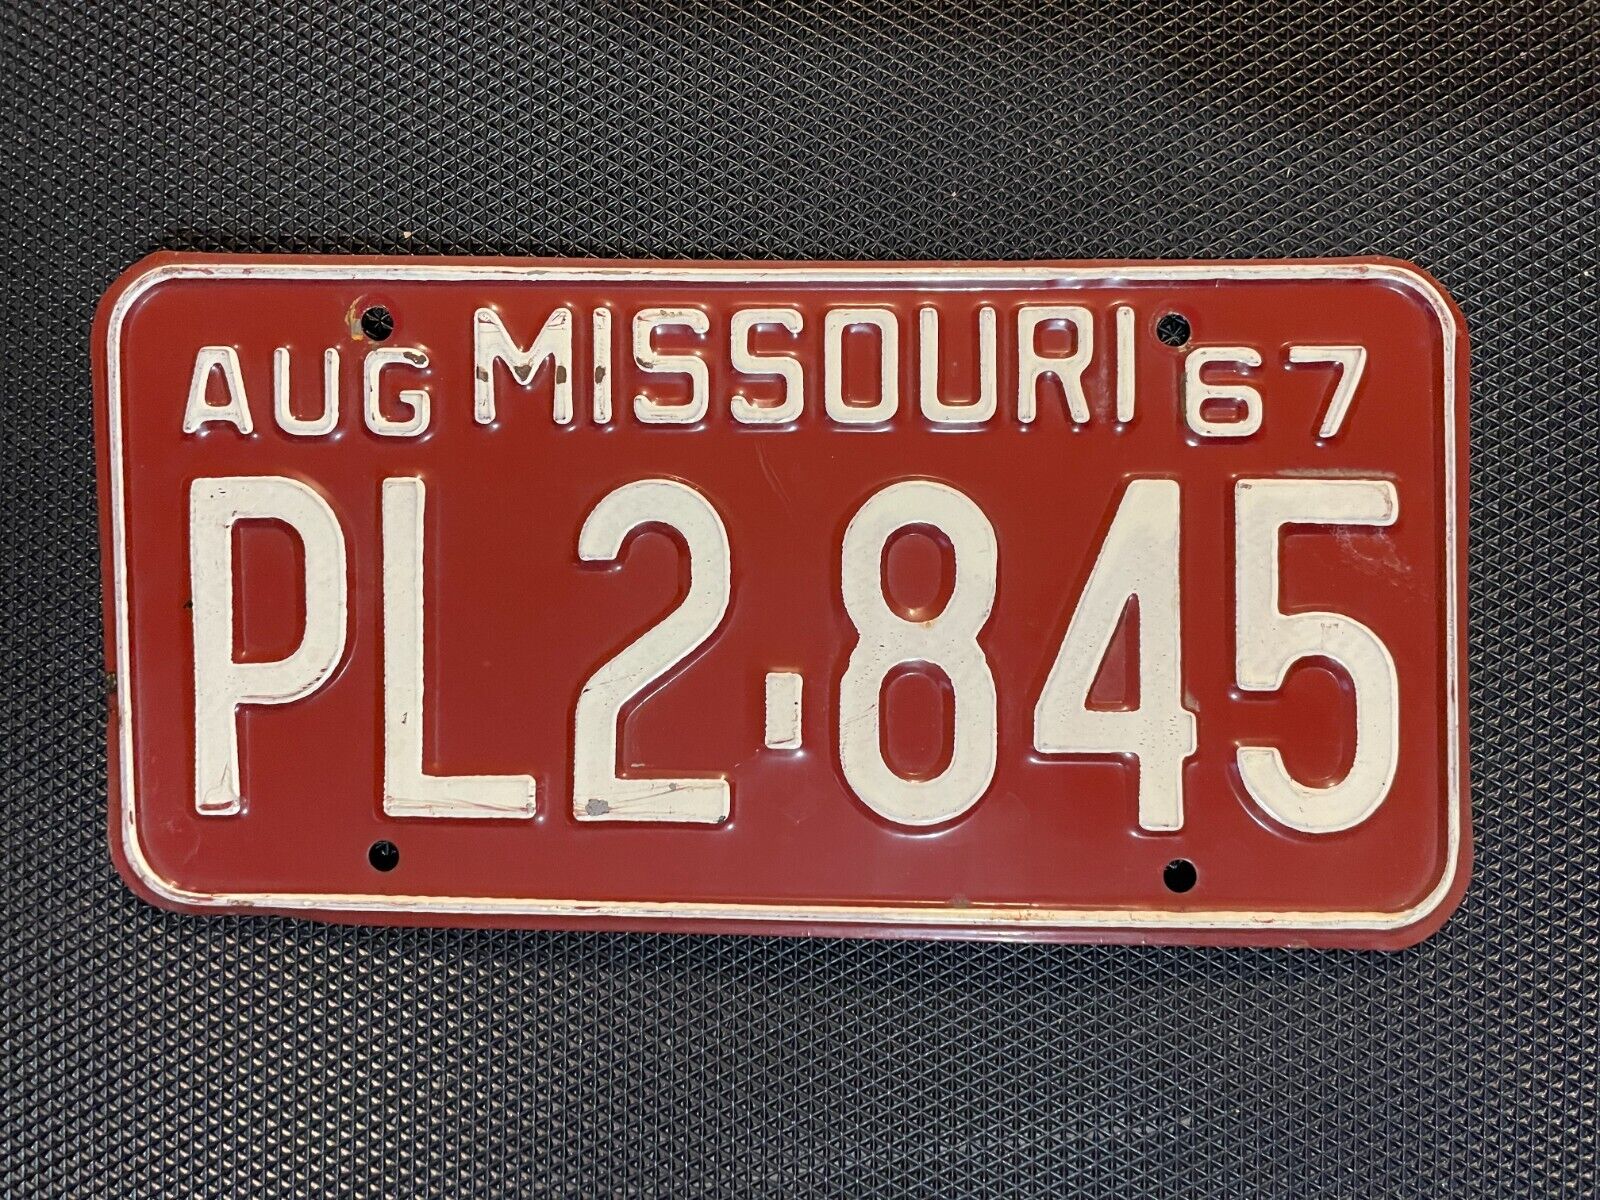 MISSOURI LICENSE PLATE 1967 AUGUST PL2 845